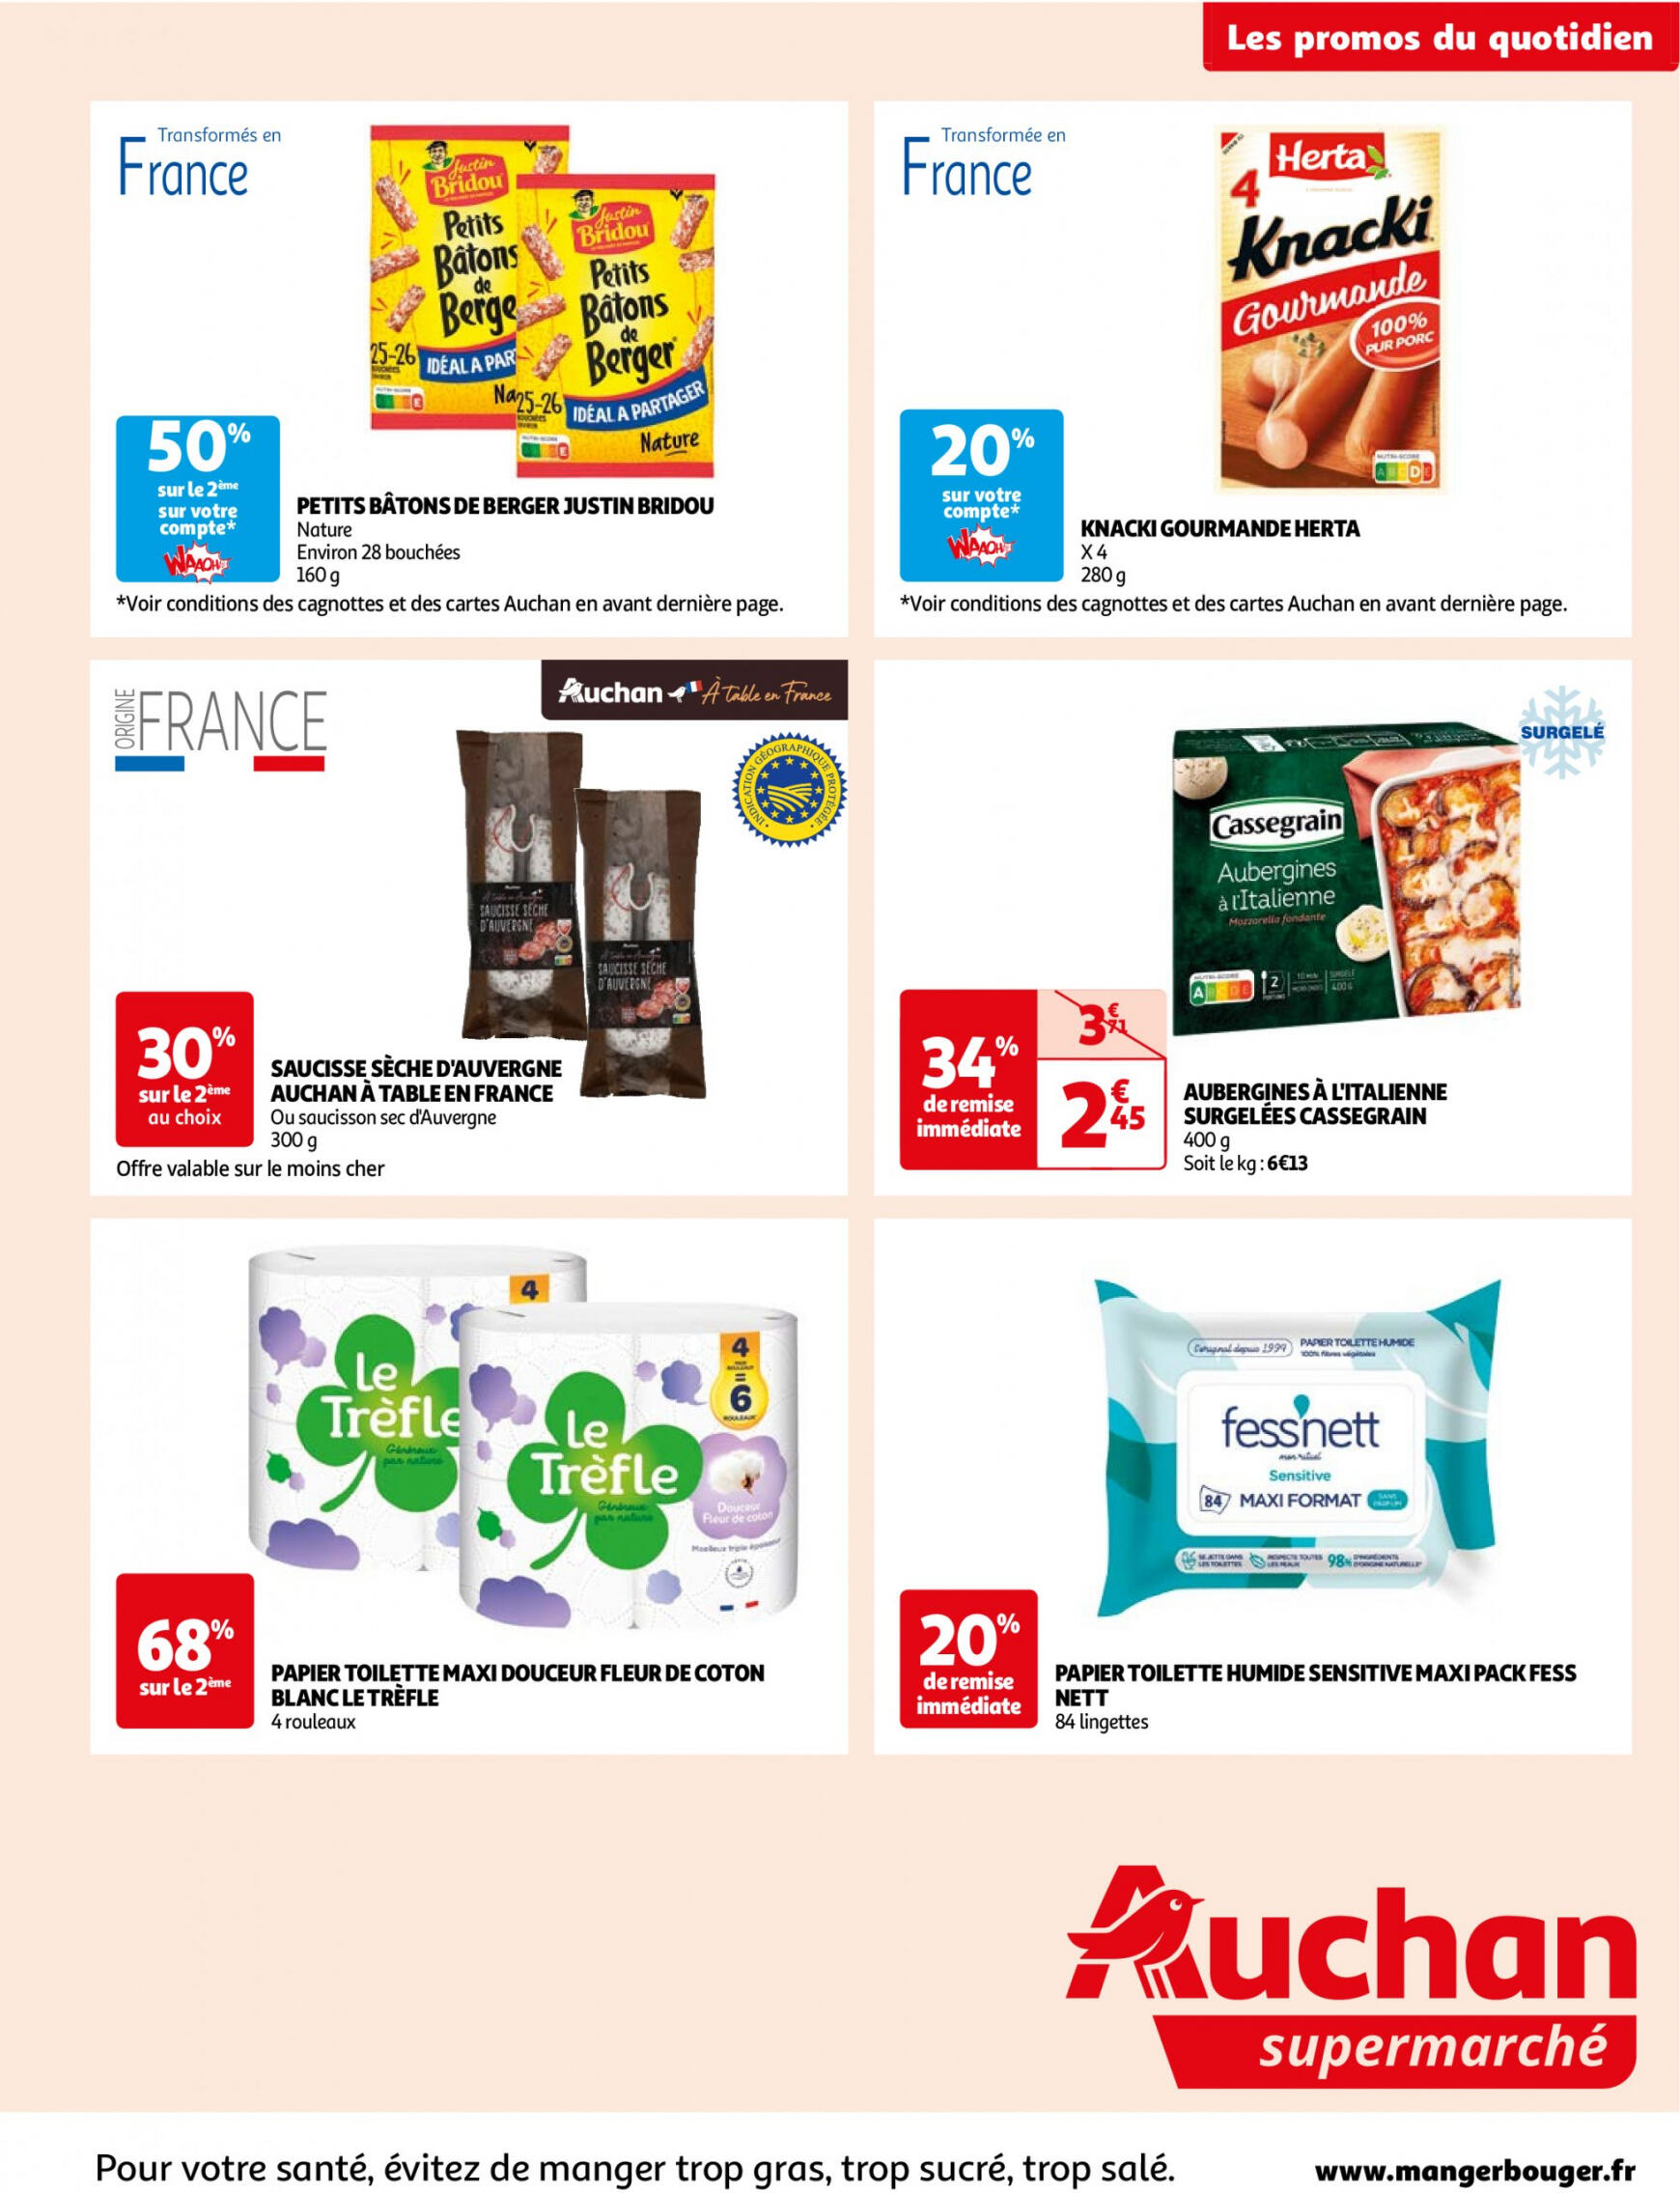 auchan - Auchan - Supermarché folder huidig 14.05. - 02.06. - page: 9